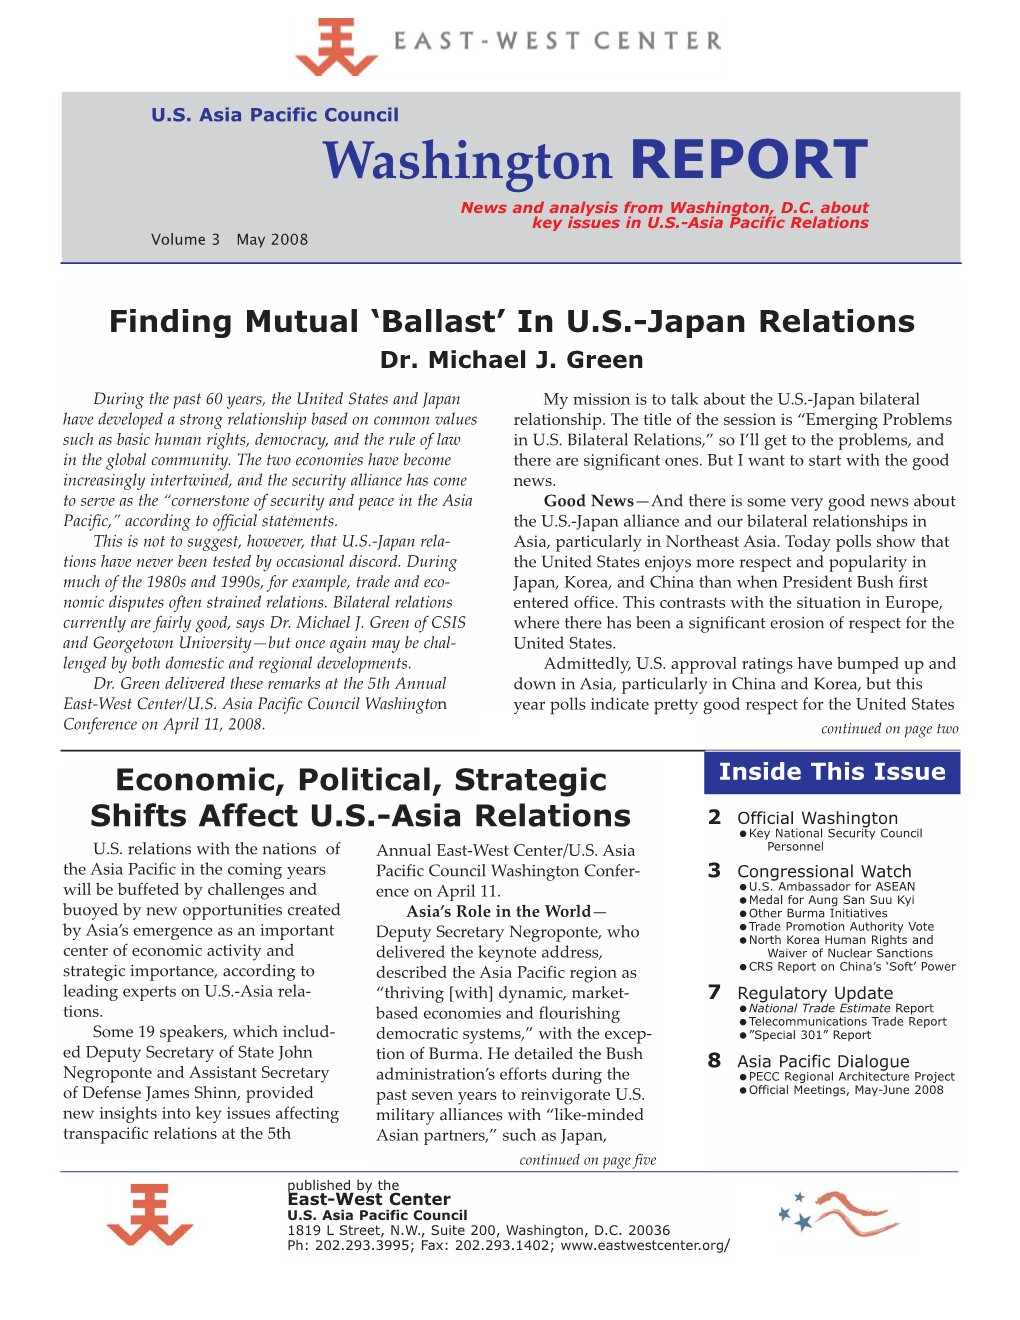 Washington REPORT News and Analysis from Washington, D.C